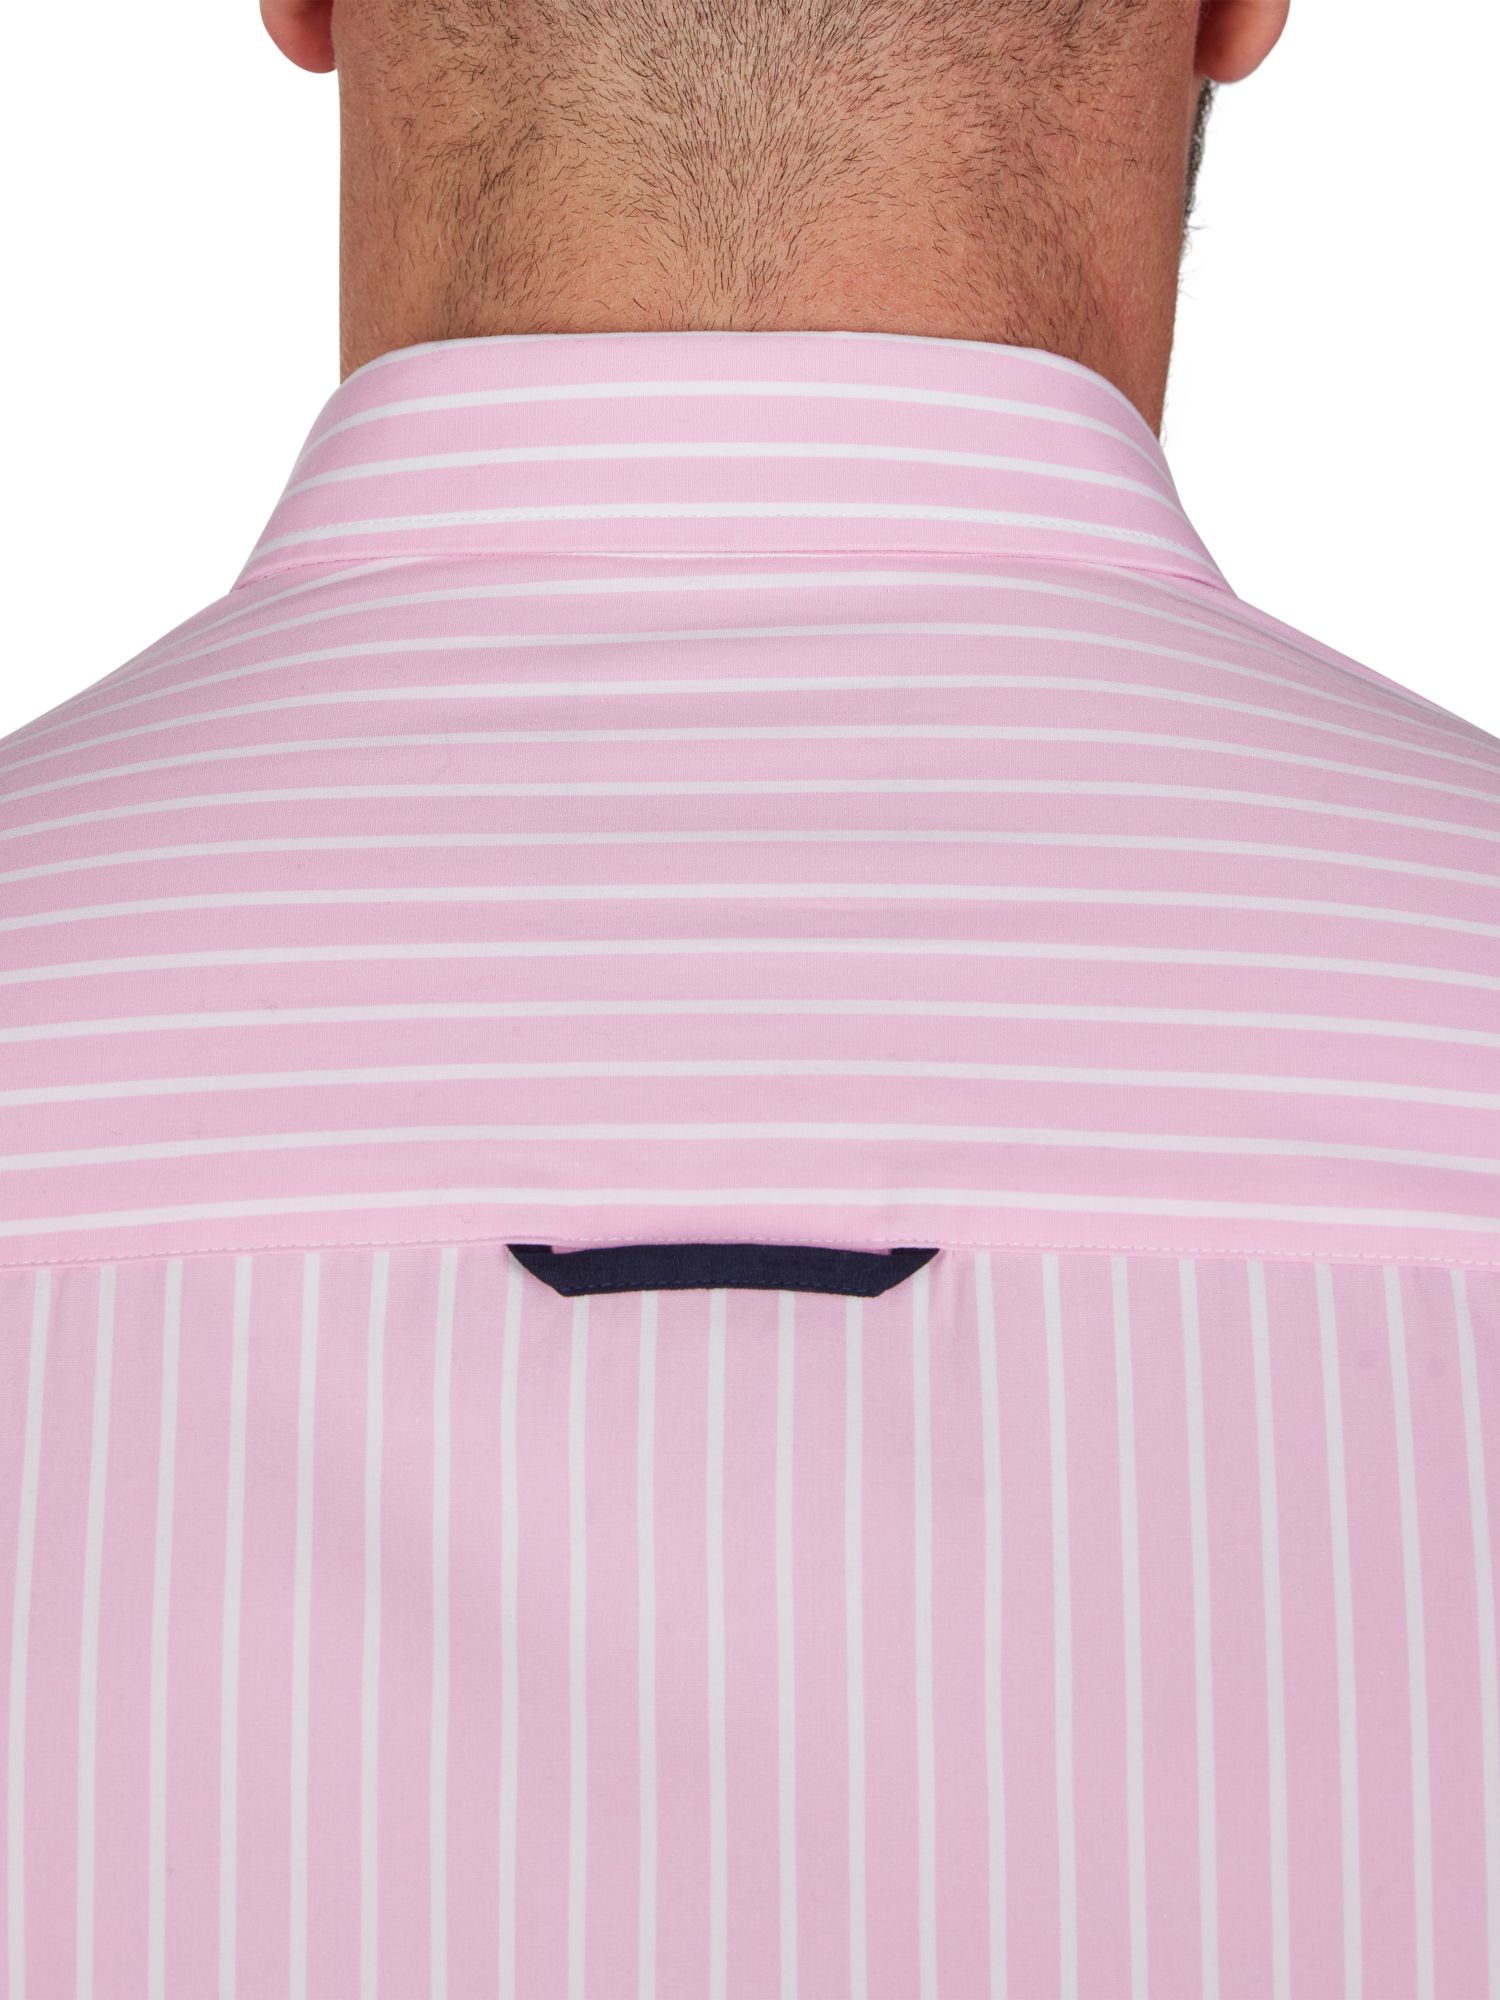 Raging Bull Classic Long Sleeve Stripe Shirt, Pink, S